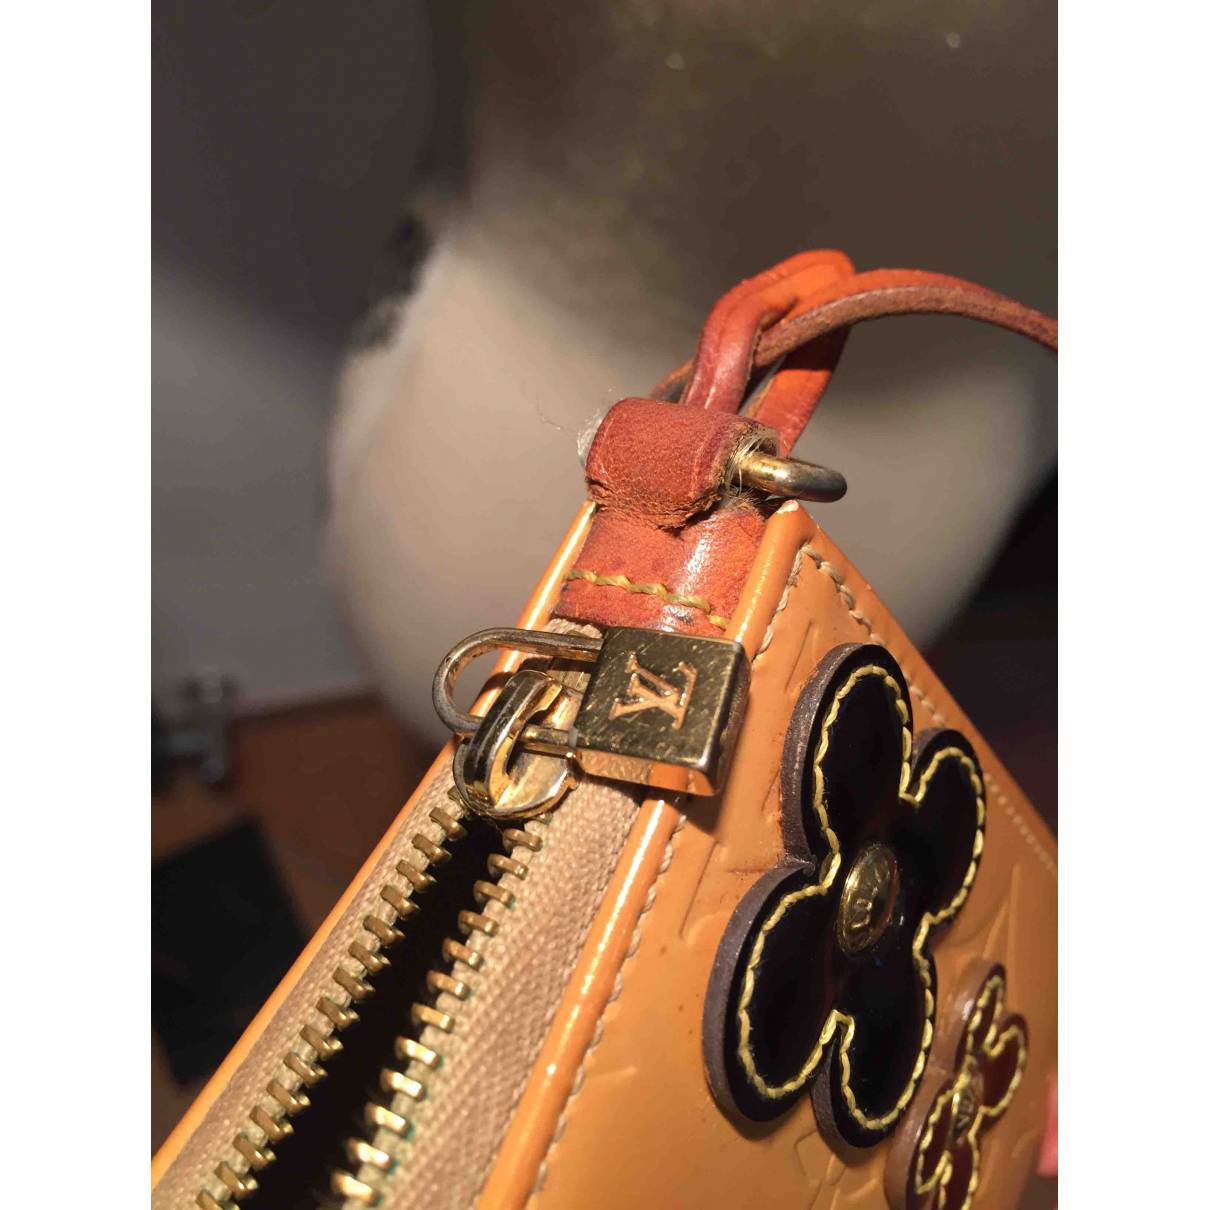 Lexington patent leather handbag Louis Vuitton Pink in Patent leather -  13296733